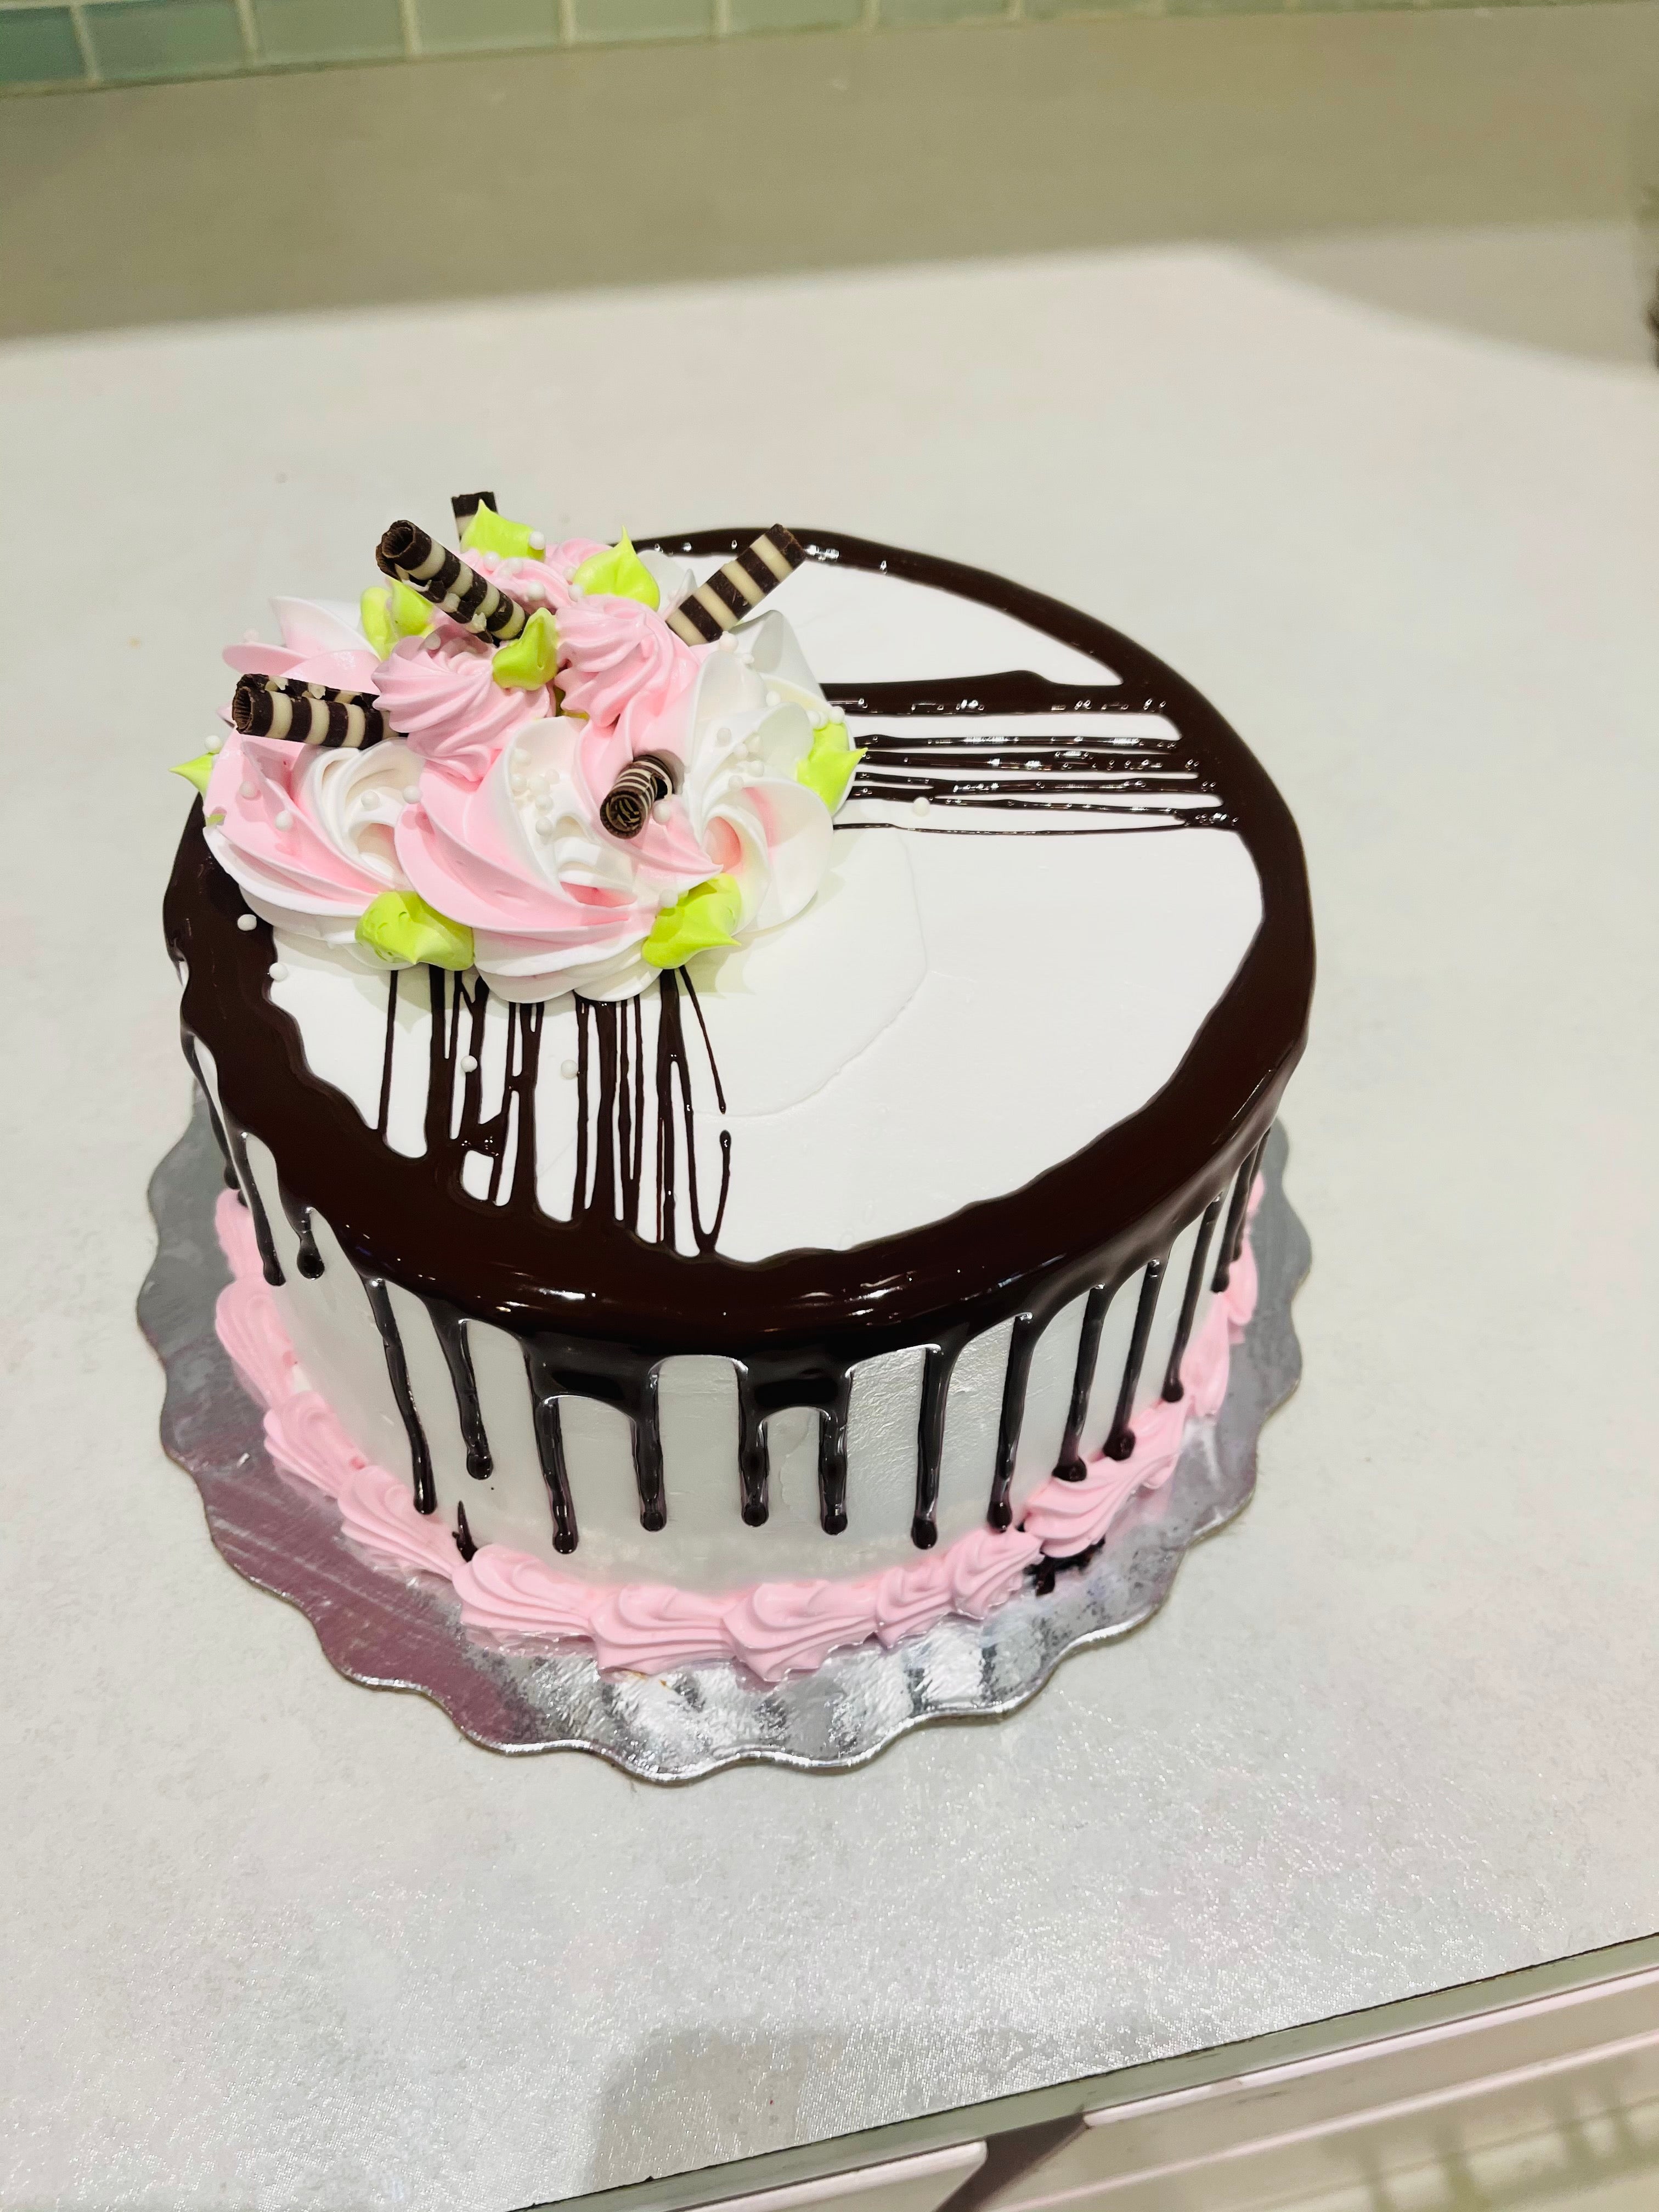 LOUIS VUITTON HEEL FONDANT CAKE - Rashmi's Bakery